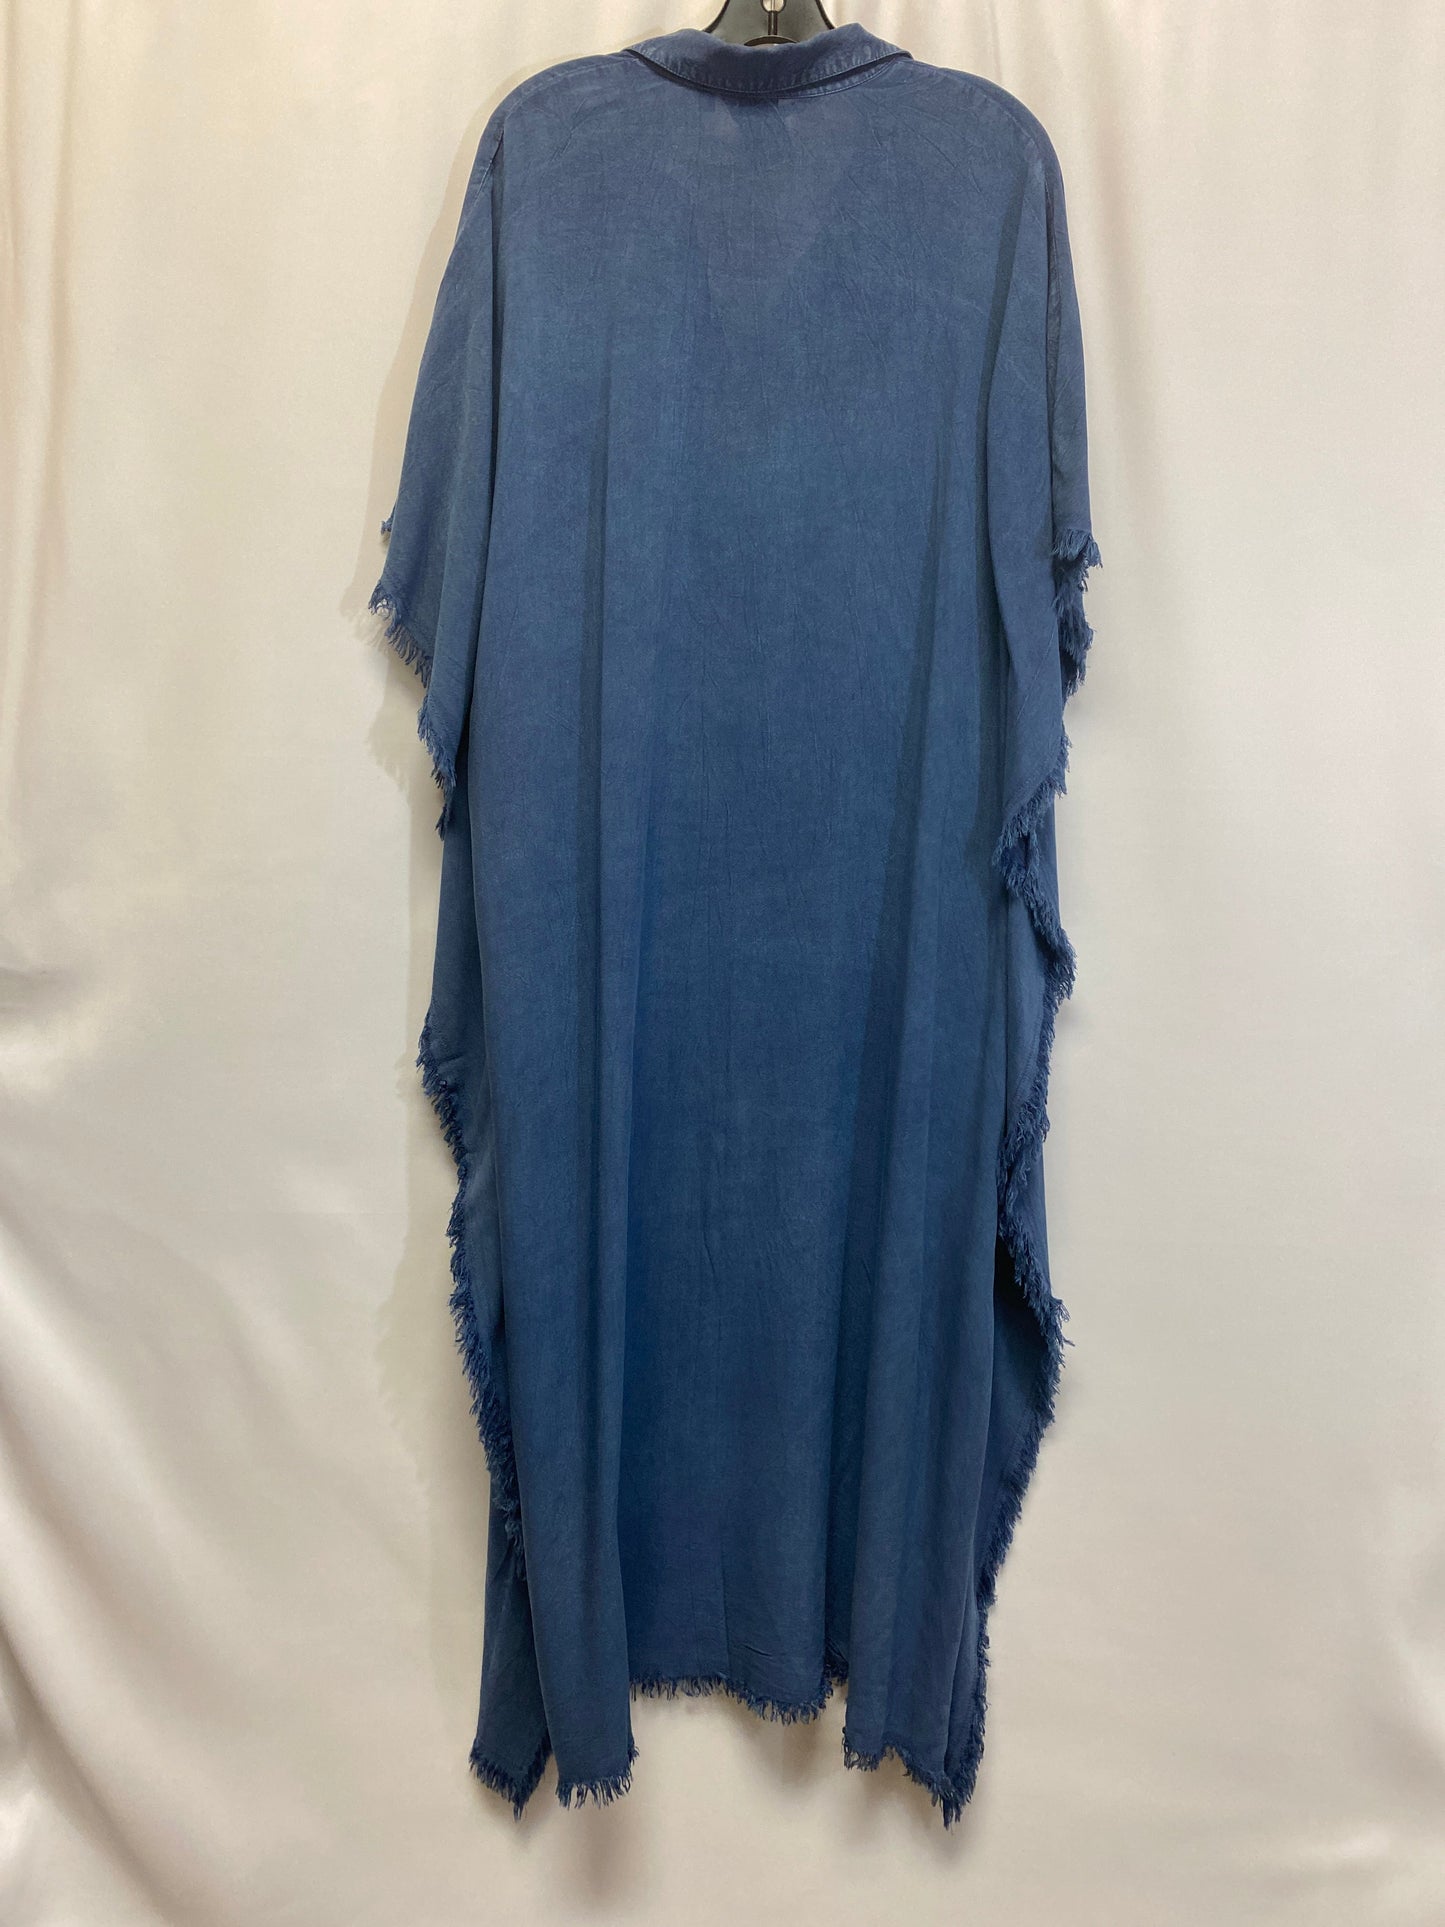 Blue Dress Casual Maxi Mlle Gabrielle, Size 1x